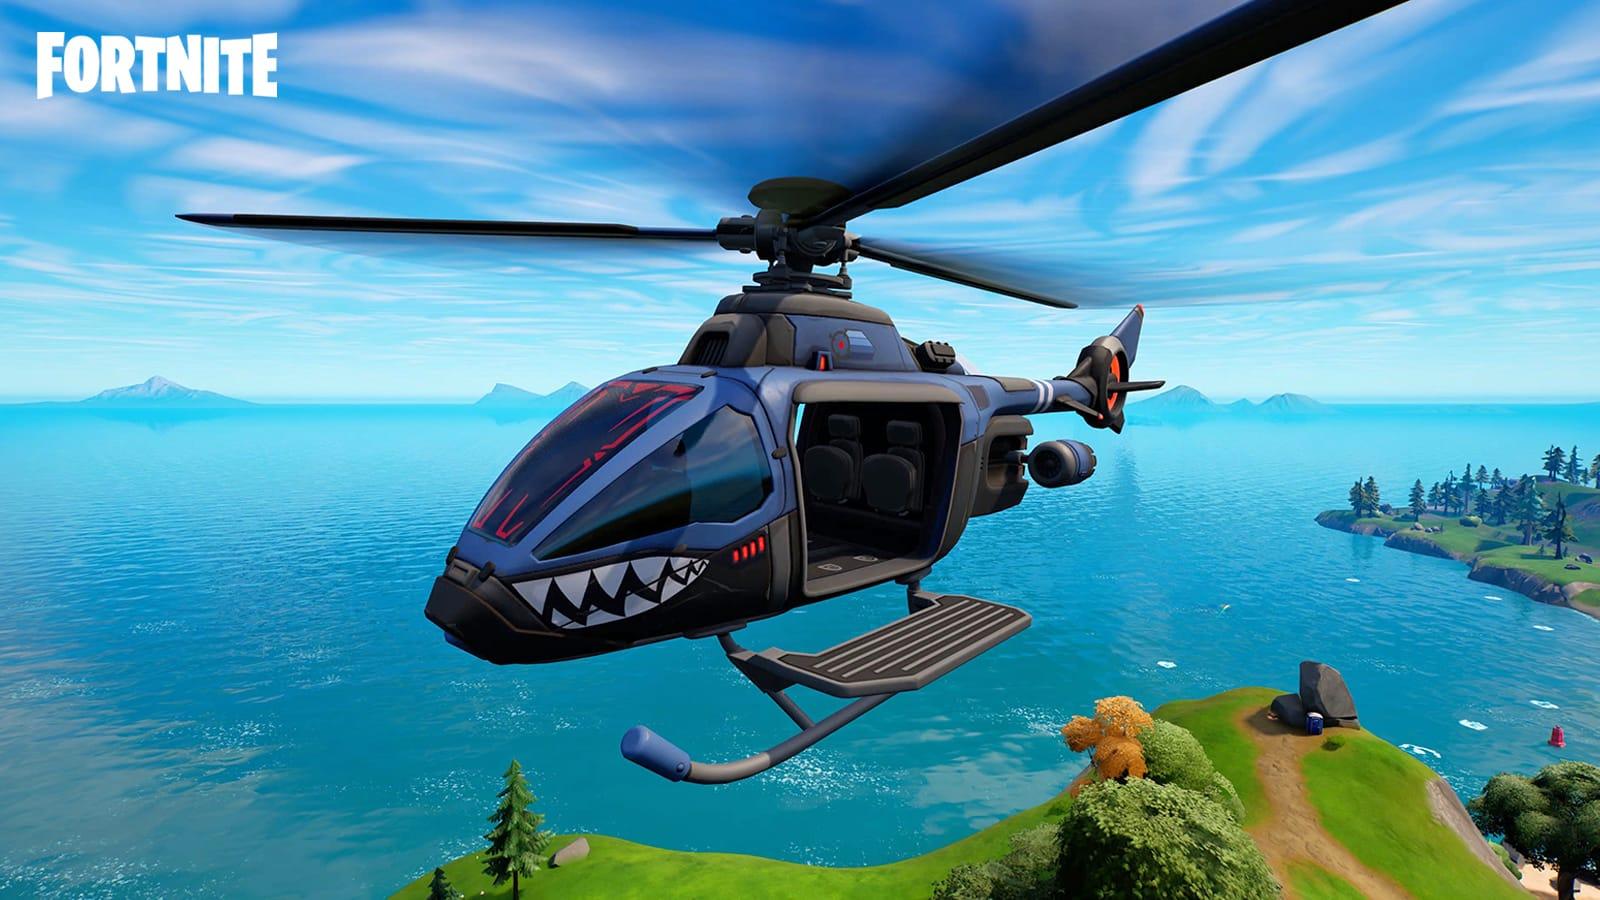 A Choppa helicopter in Fortnite